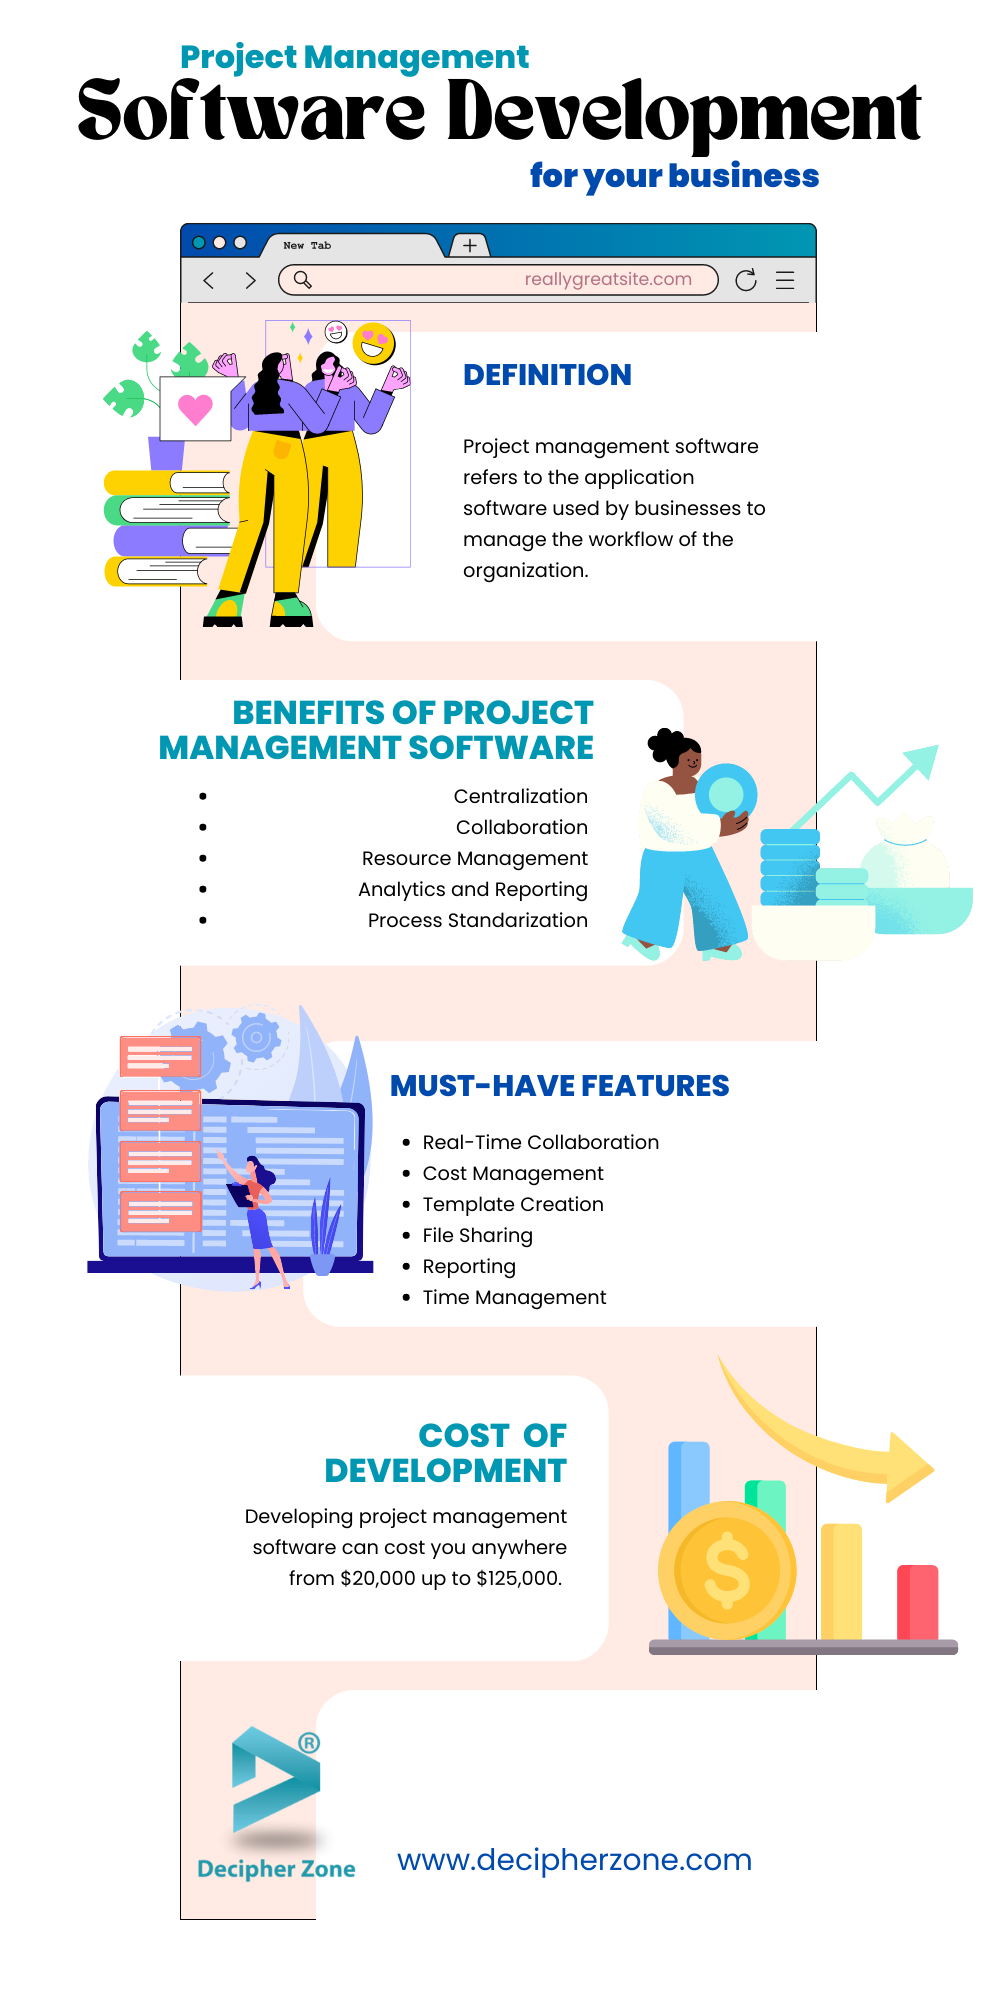 Project Management Software Development